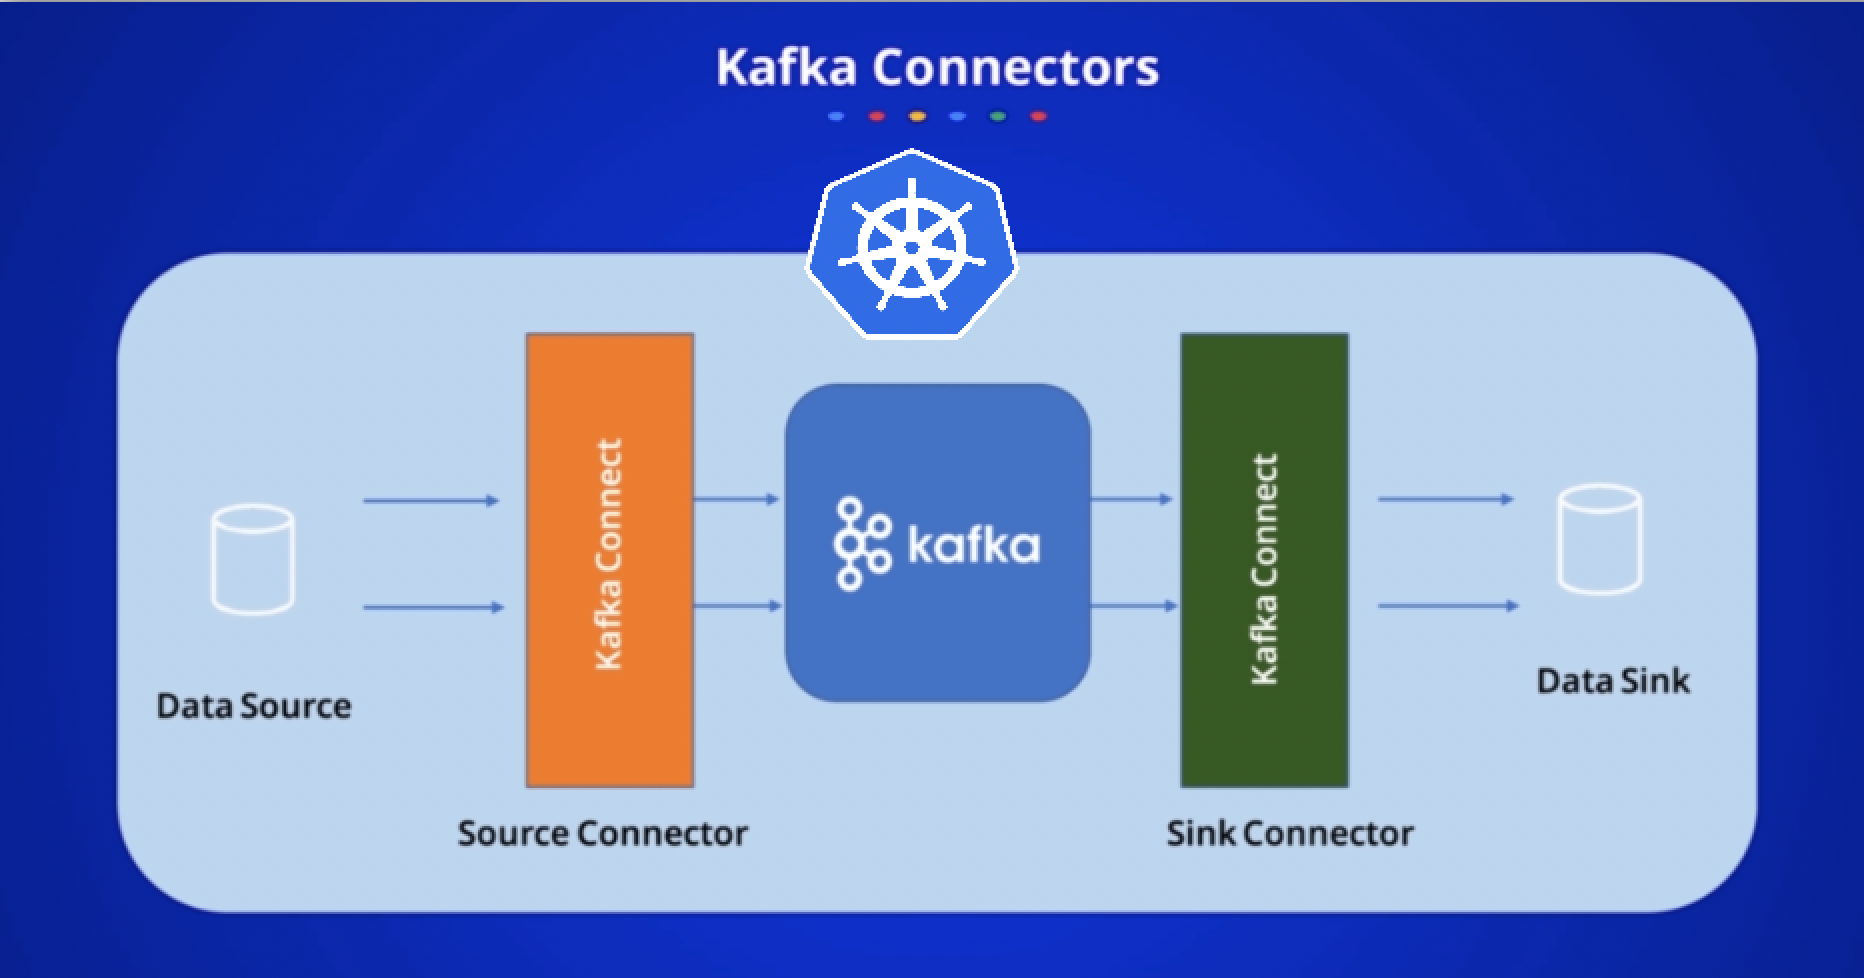 [Kafka-connect] Install Kafka-connect on Kubernetes through helm-chart.